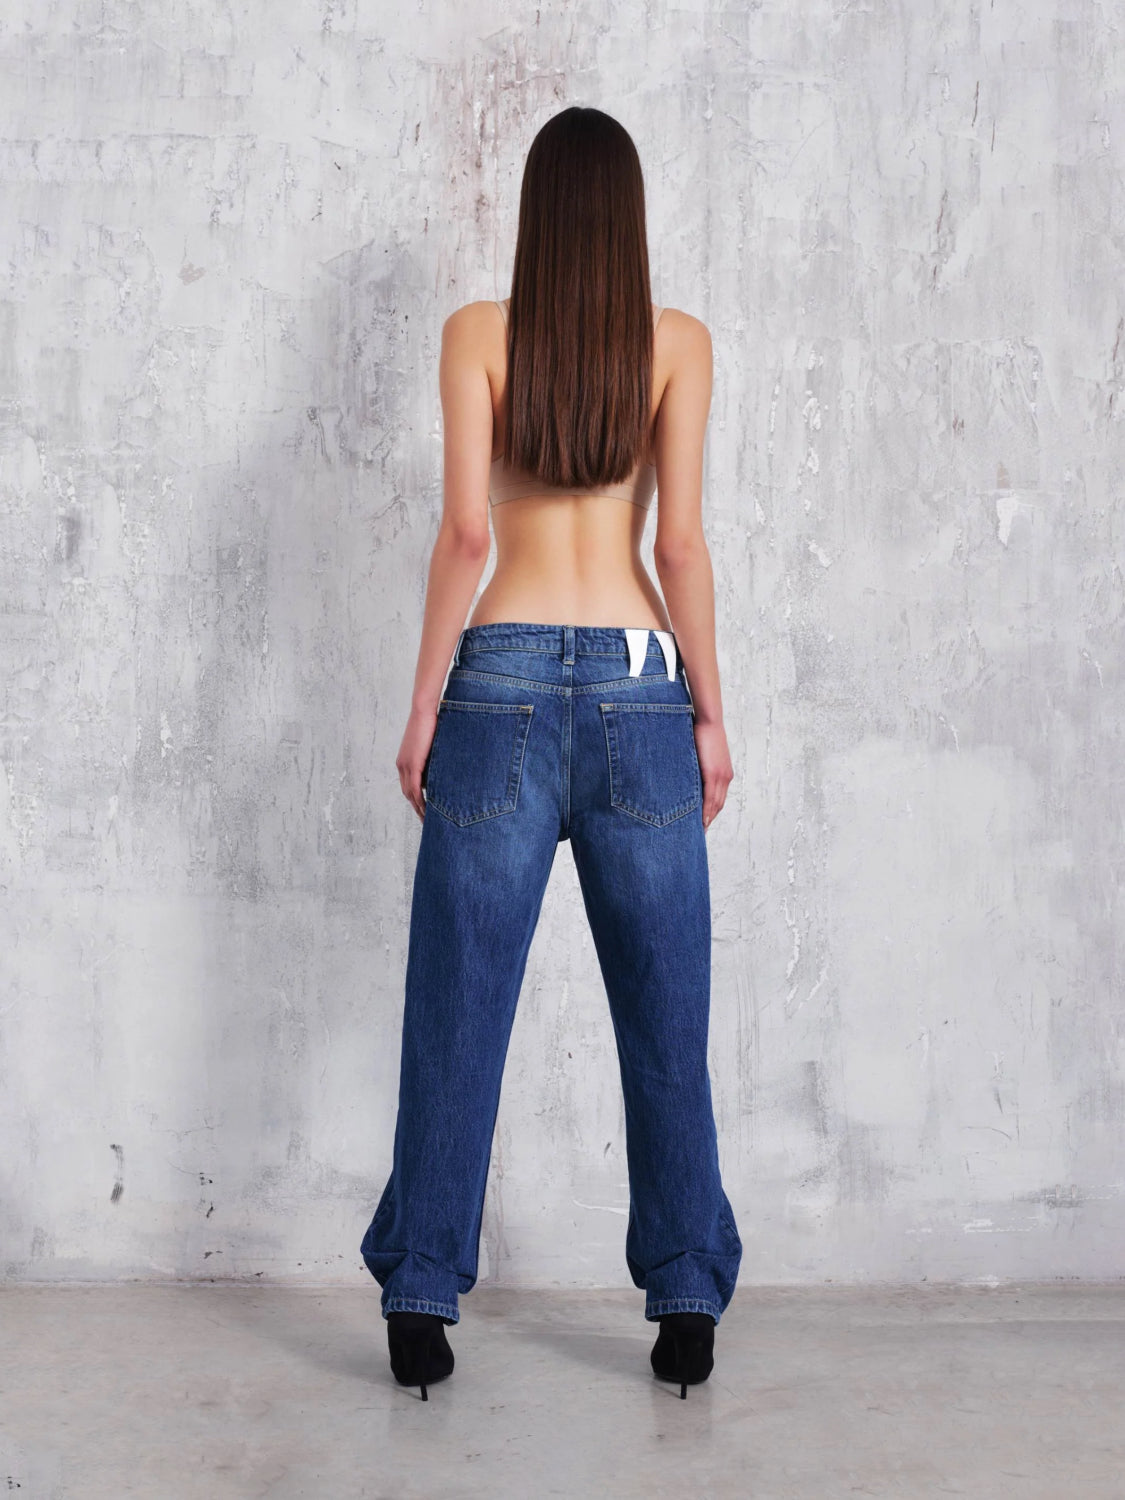 Darkpark Jeans | Jeans Liz medium washed blau | WTR21 DBL01 W053 / ADAM/EVE